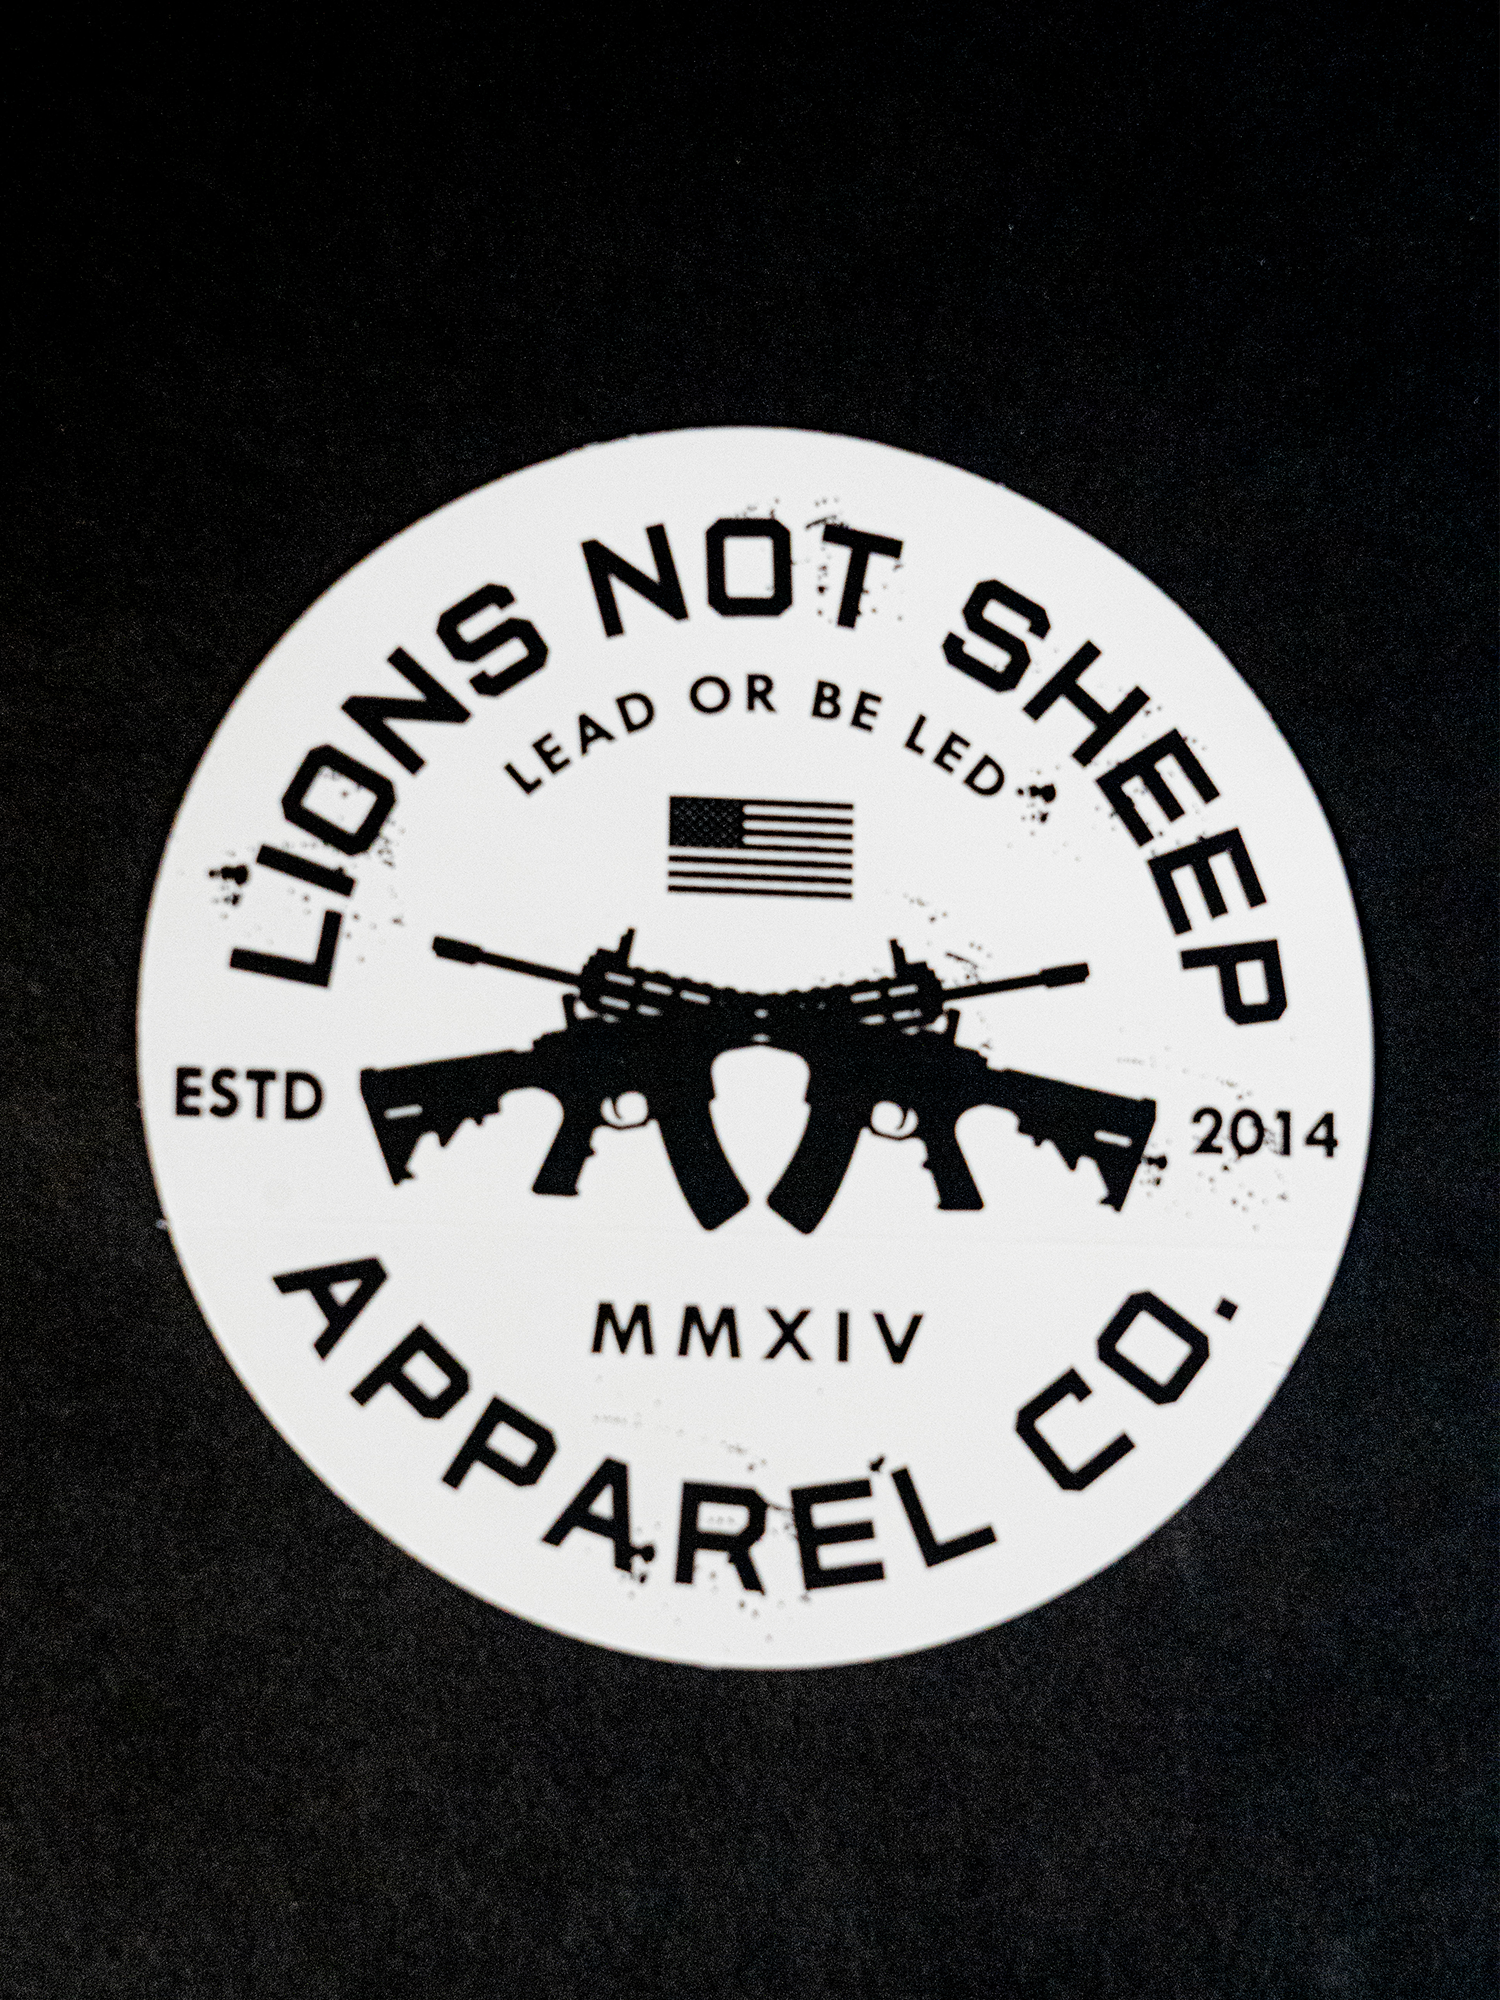 CROSSED GUNS Vinyl Sticker - Lions Not Sheep ®